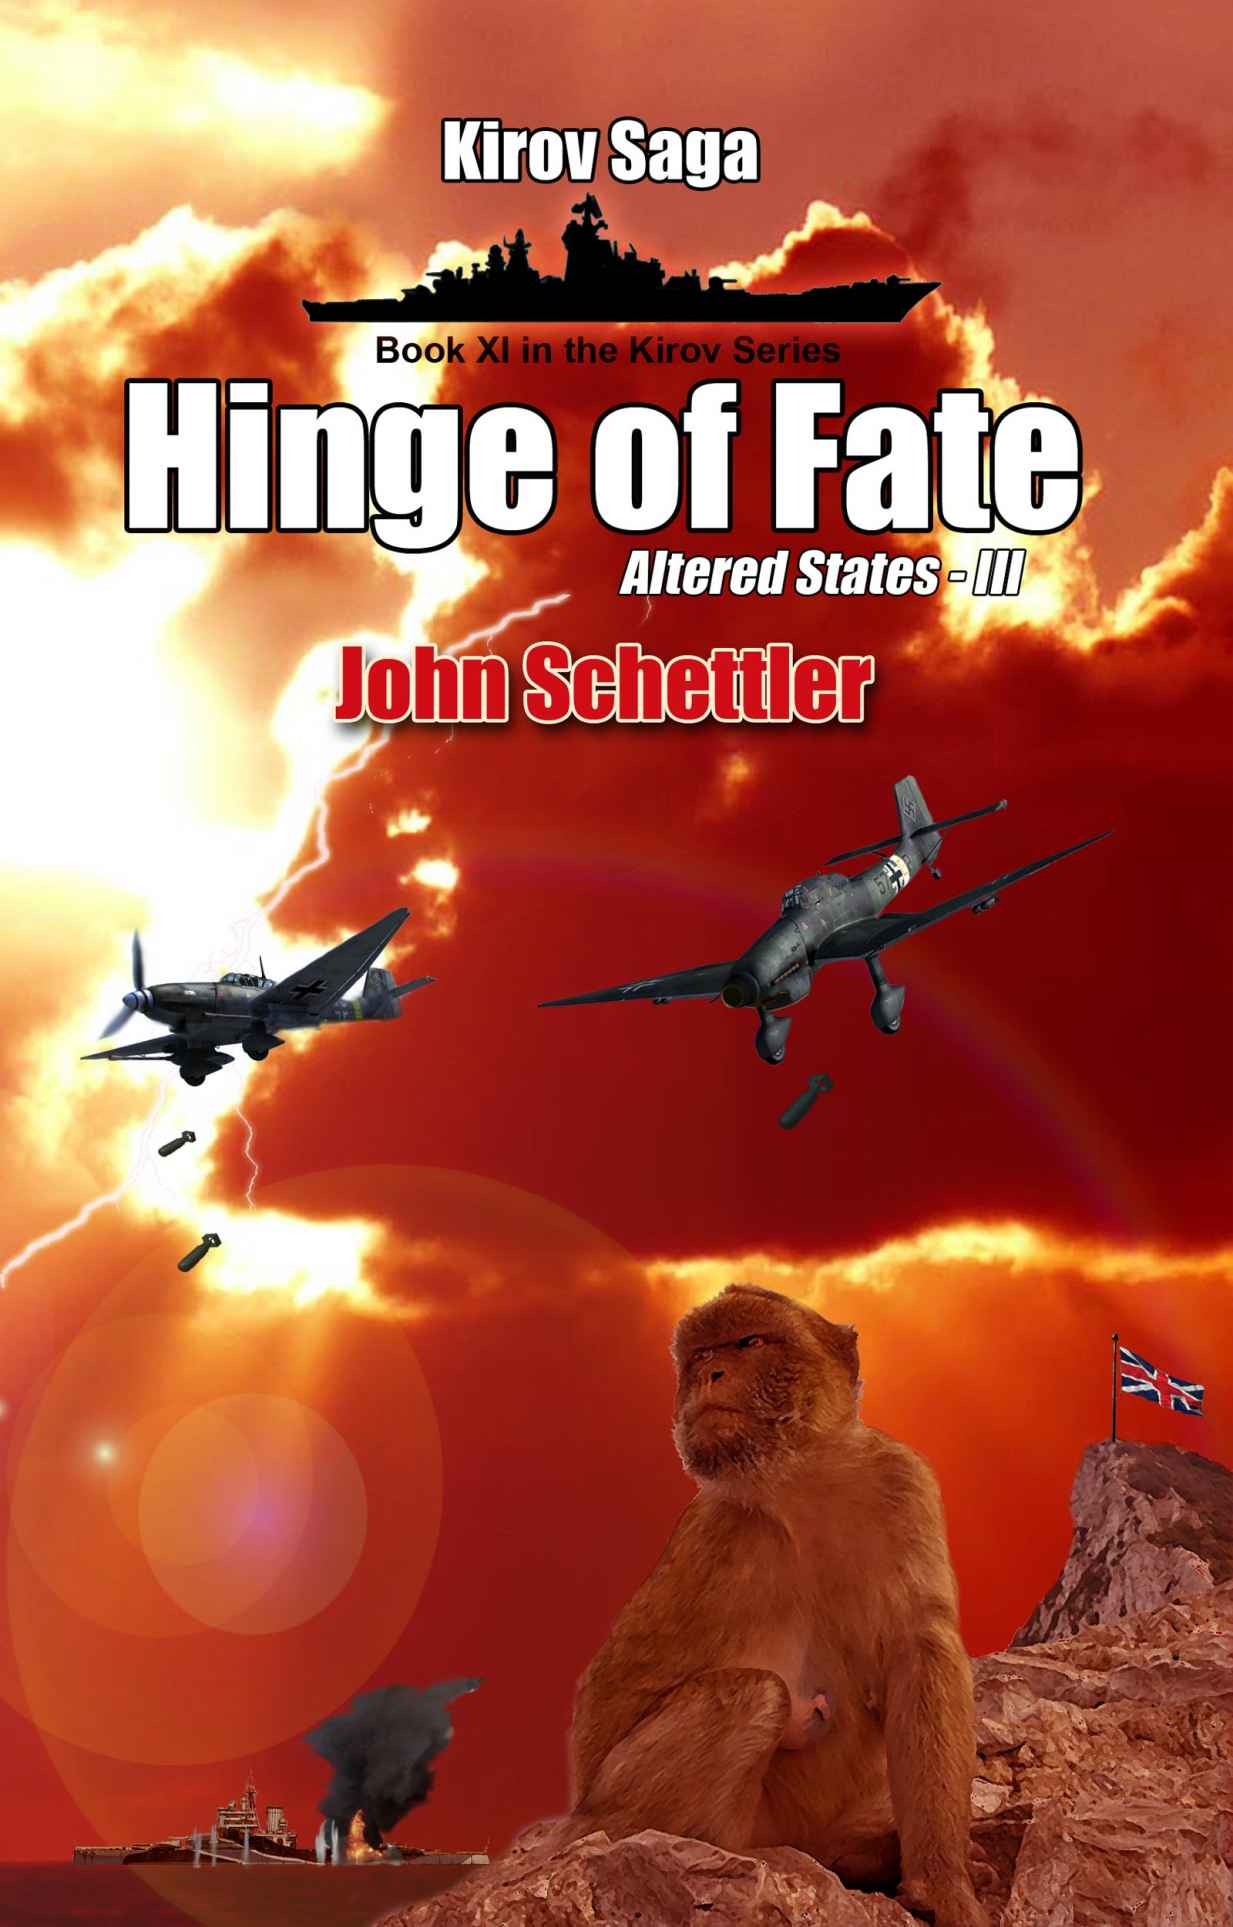 Schettler John - Altered States -Volume III. Hinge of Fate скачать бесплатно